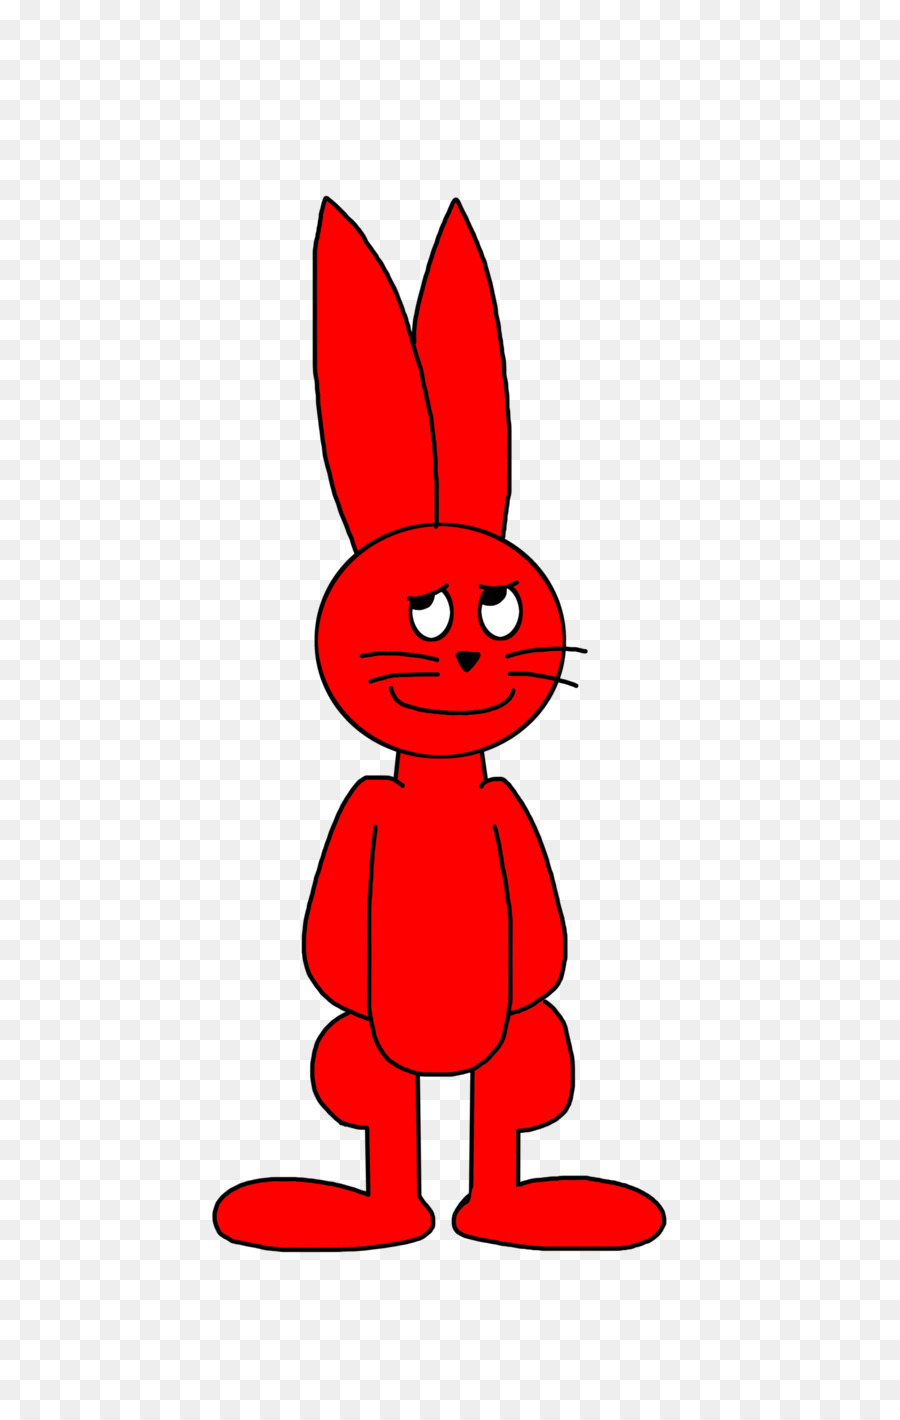 Domestic rabbit Easter Bunny clipart - Kaninchen